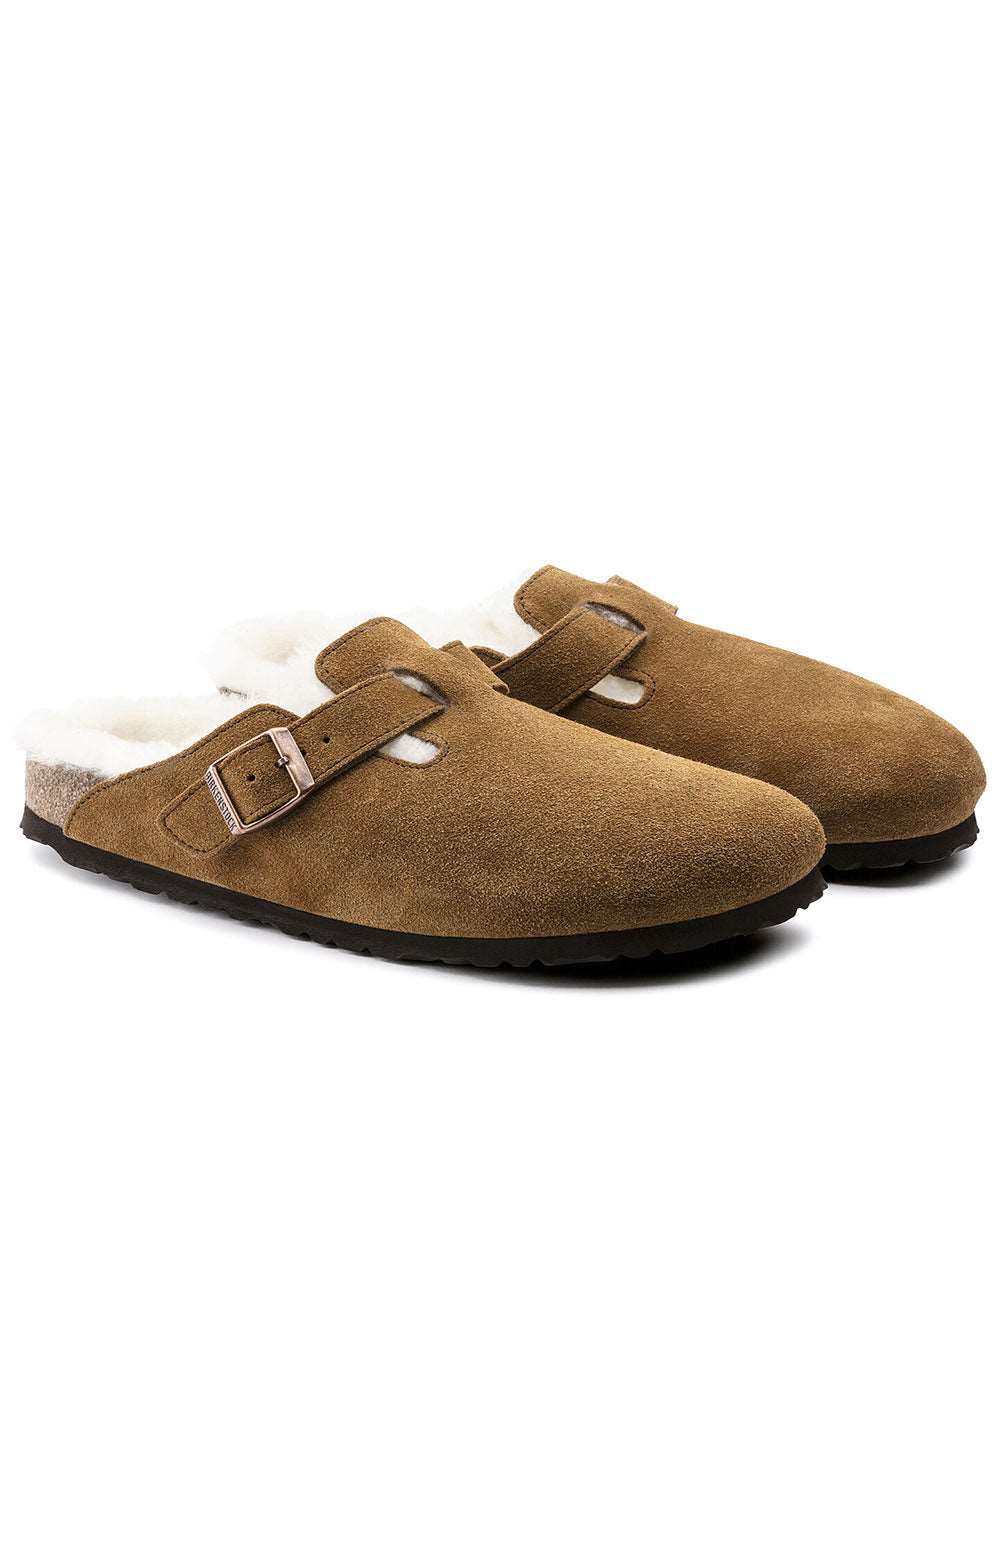 (1001140) Boston Shearling Sandals - Mink